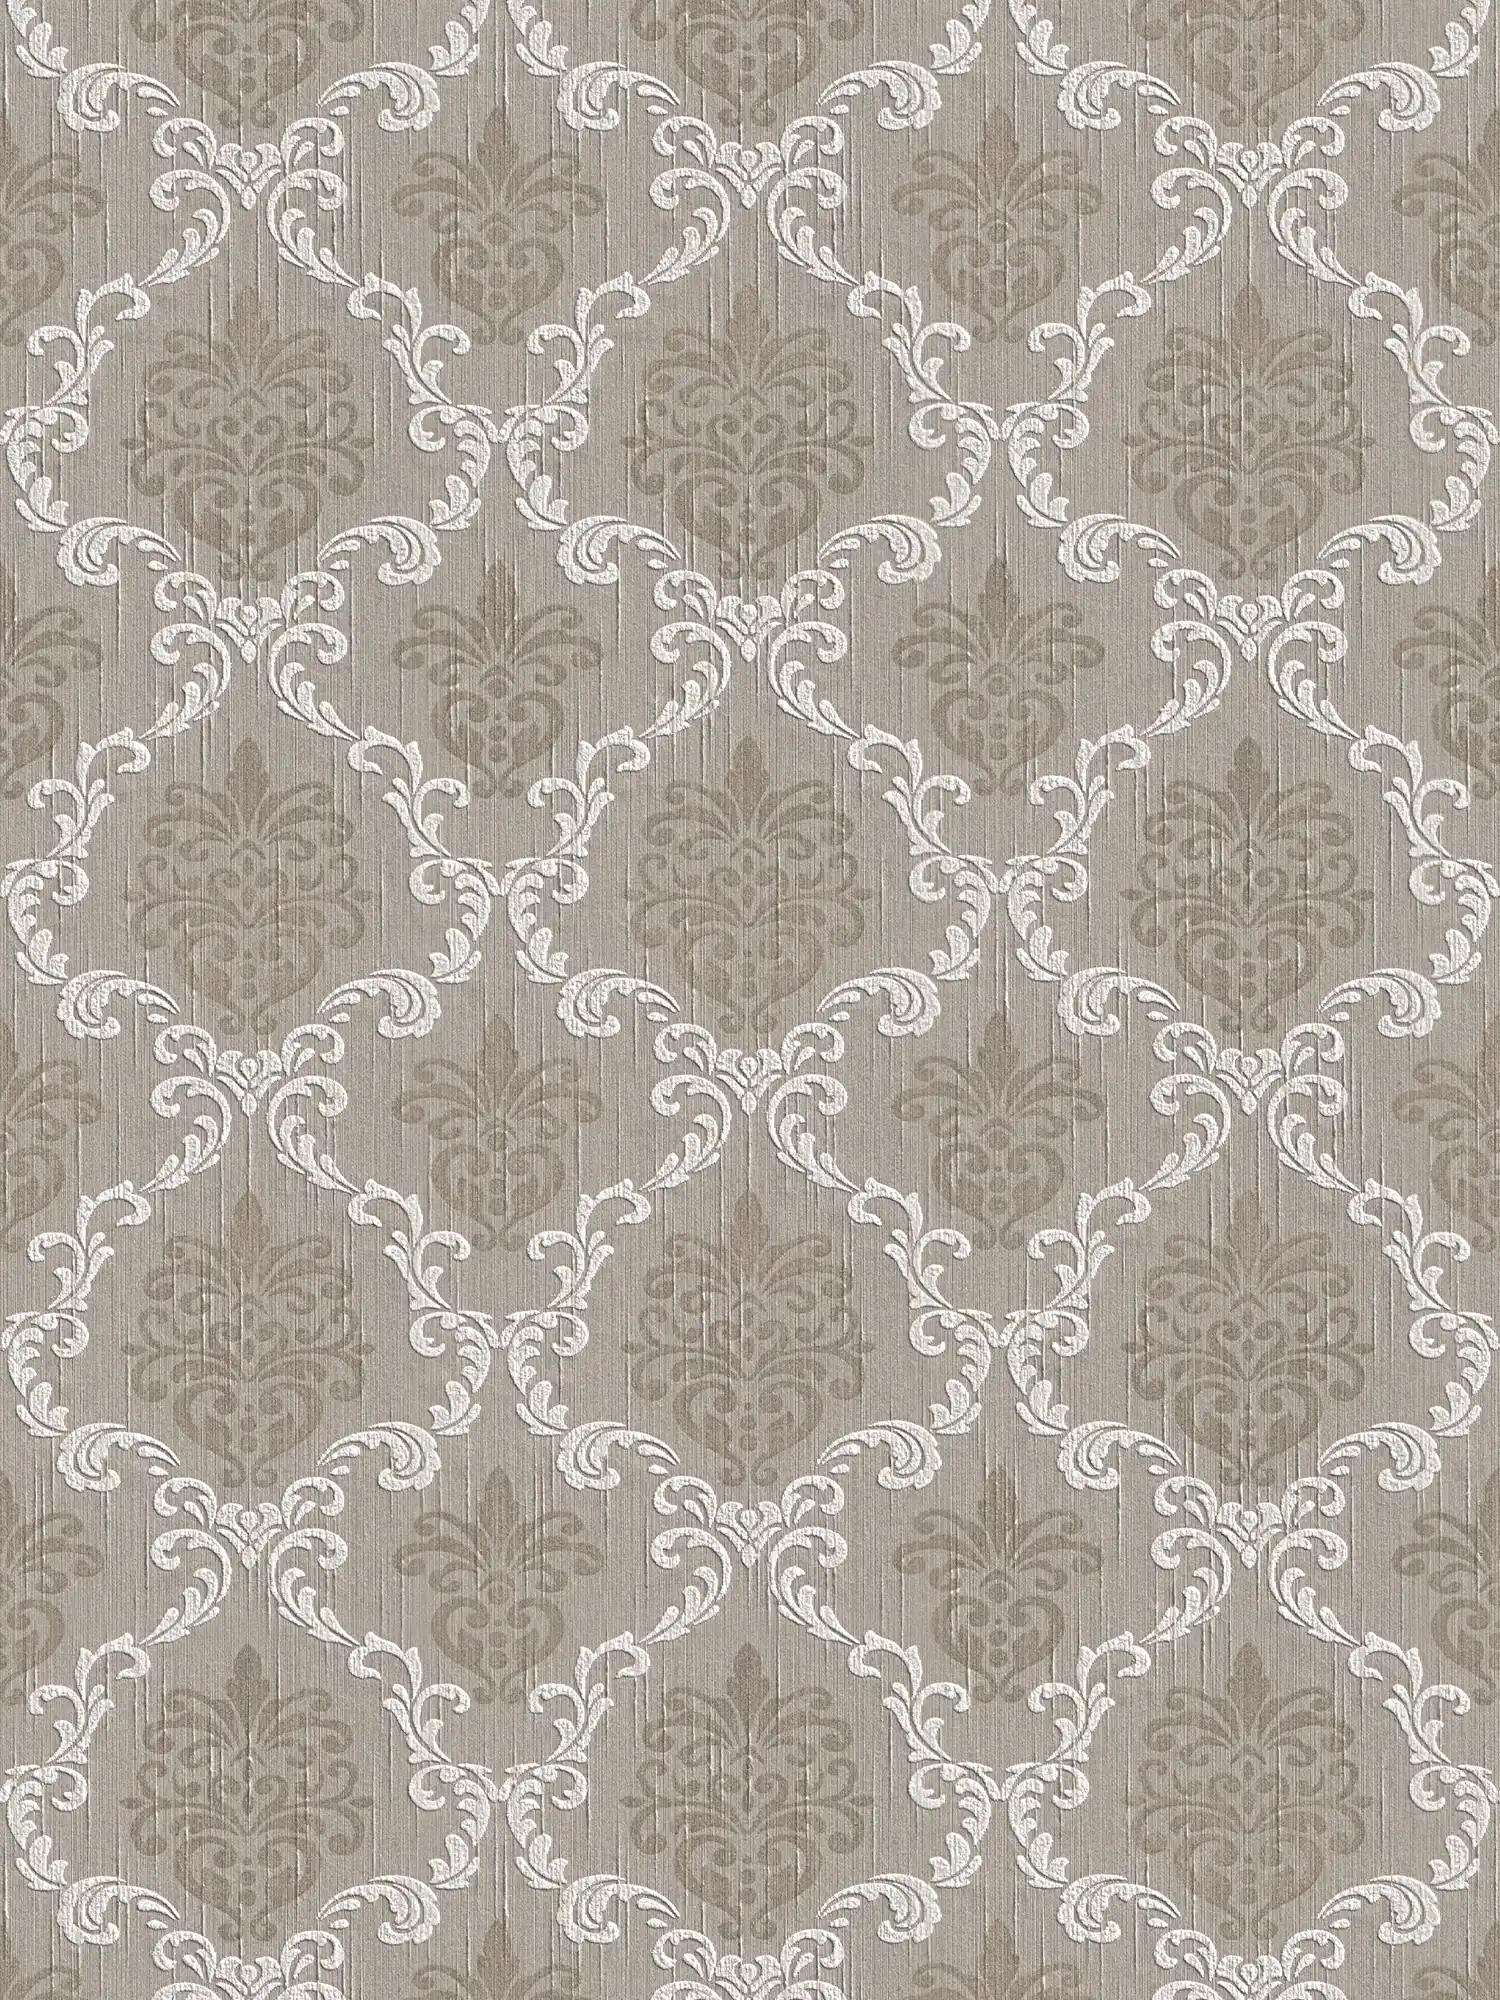         Vliestapete mit Ornament Design im Kolonial Stil – Beige, Grau
    